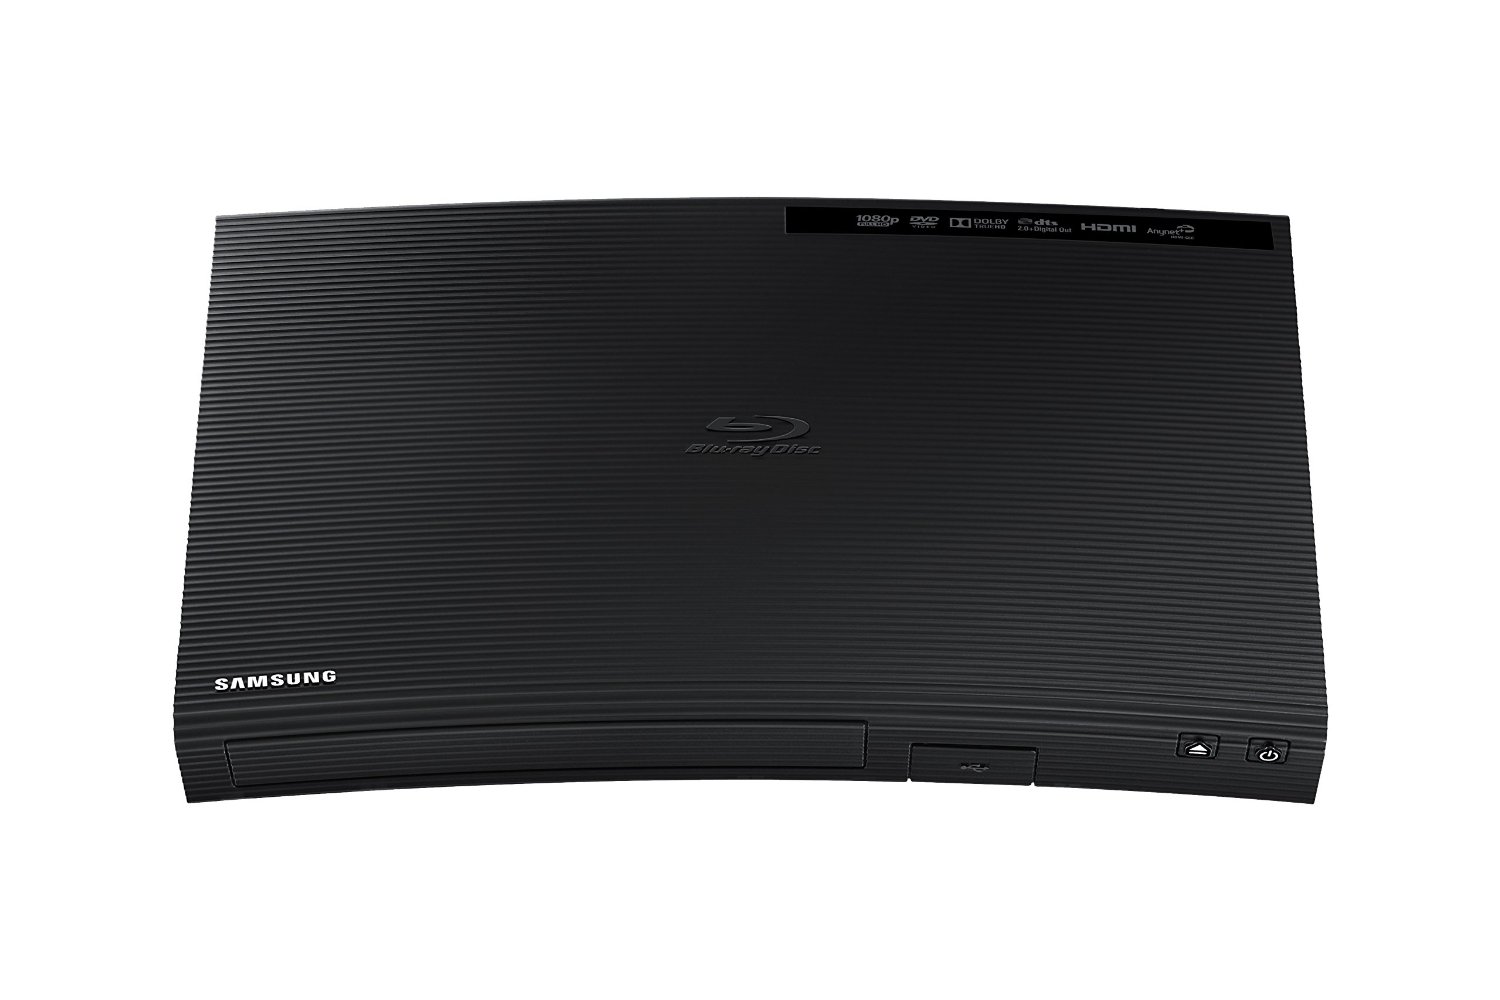 Samsung BD-J5100 Curved Blu-ray Player